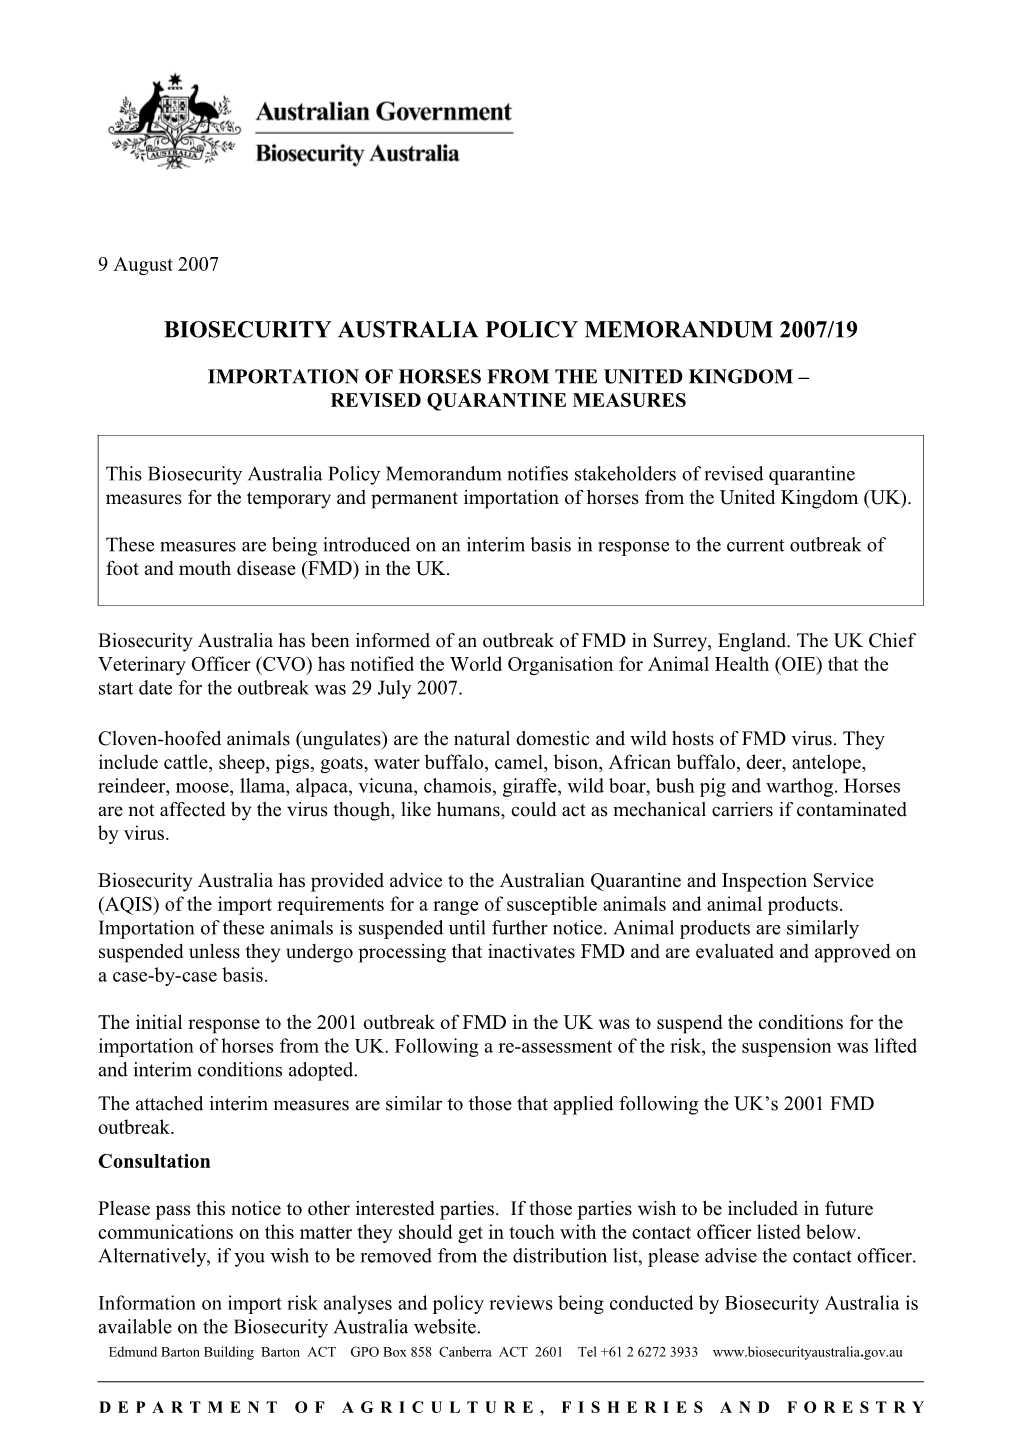 Biosecurity Australia Policy Memorandum 2007/19